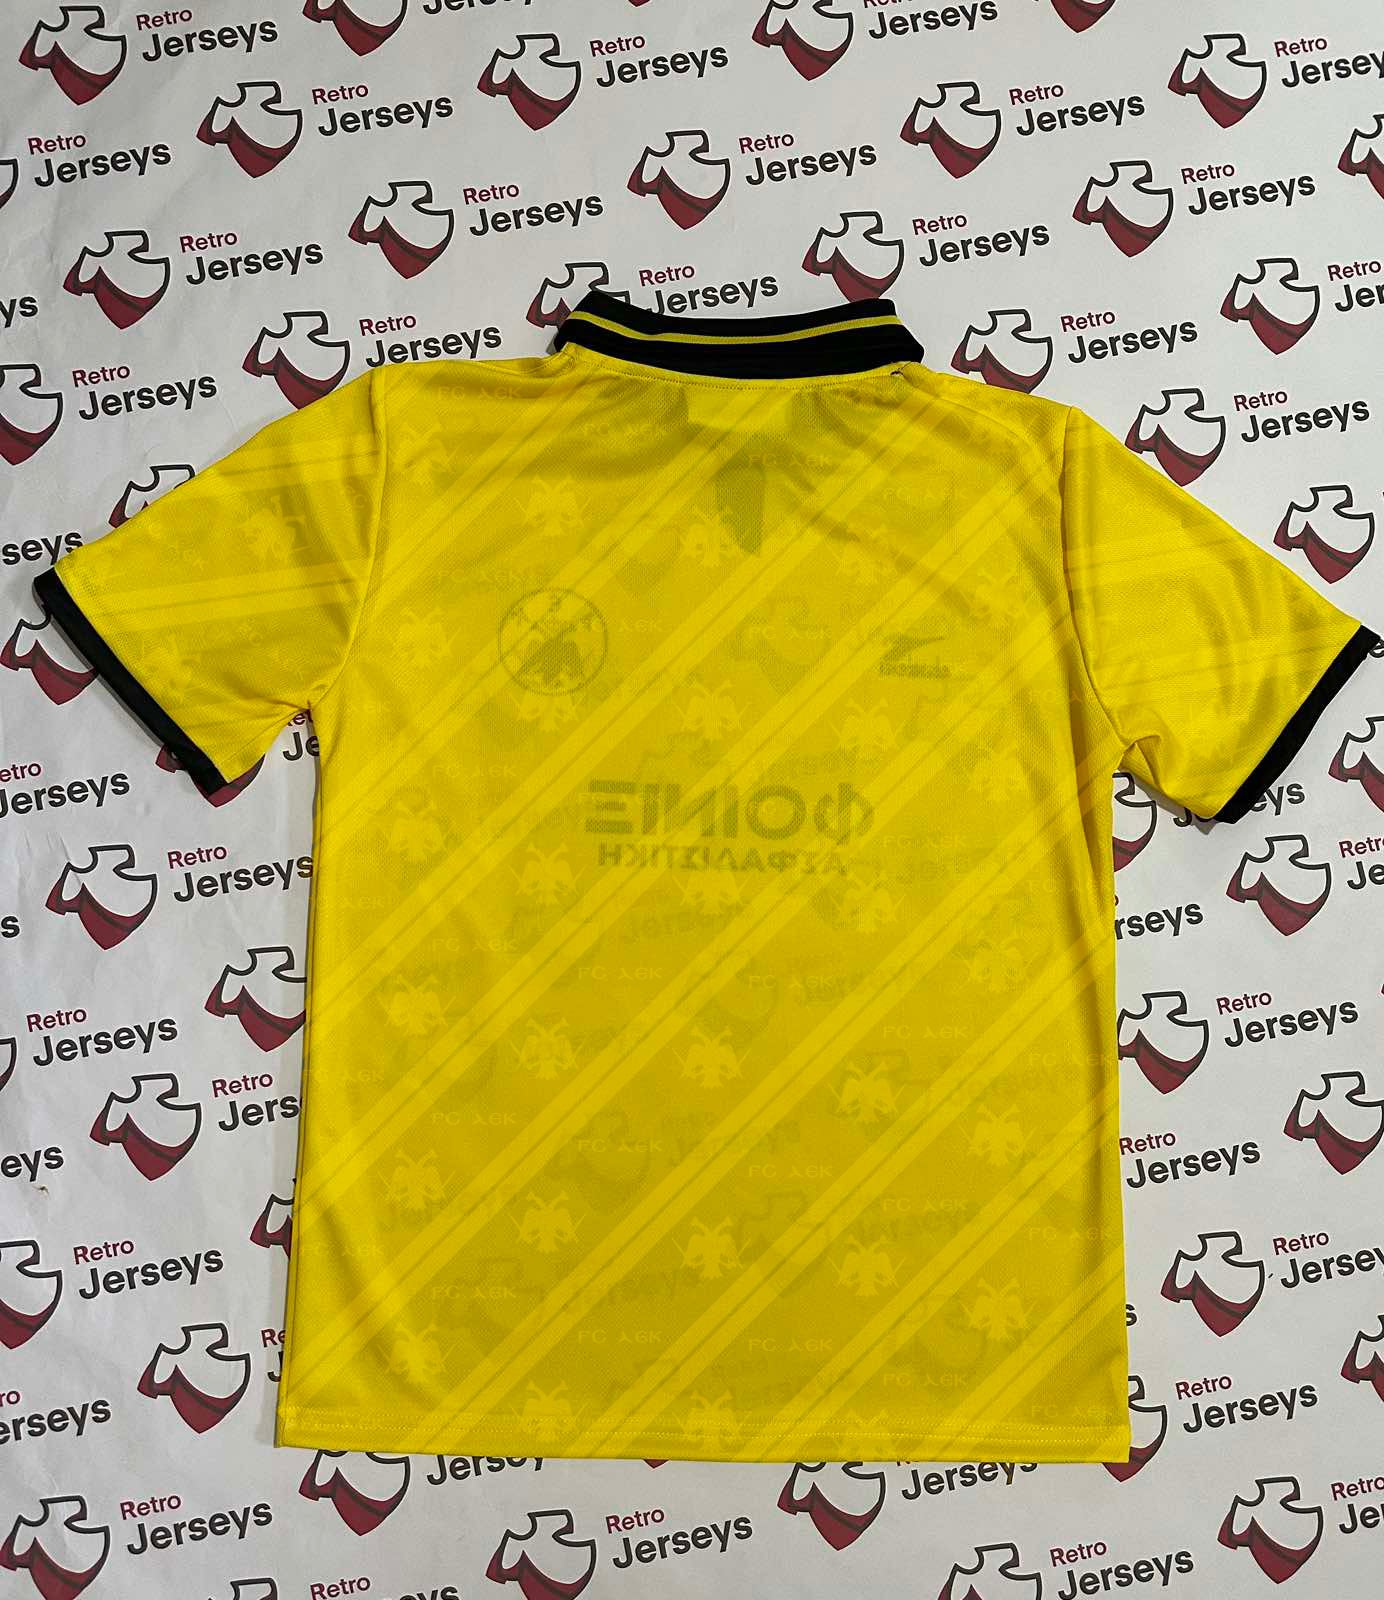 AEK Athens Shirt 1991-1992 Cup - Retro Jerseys, φανέλα αεκ